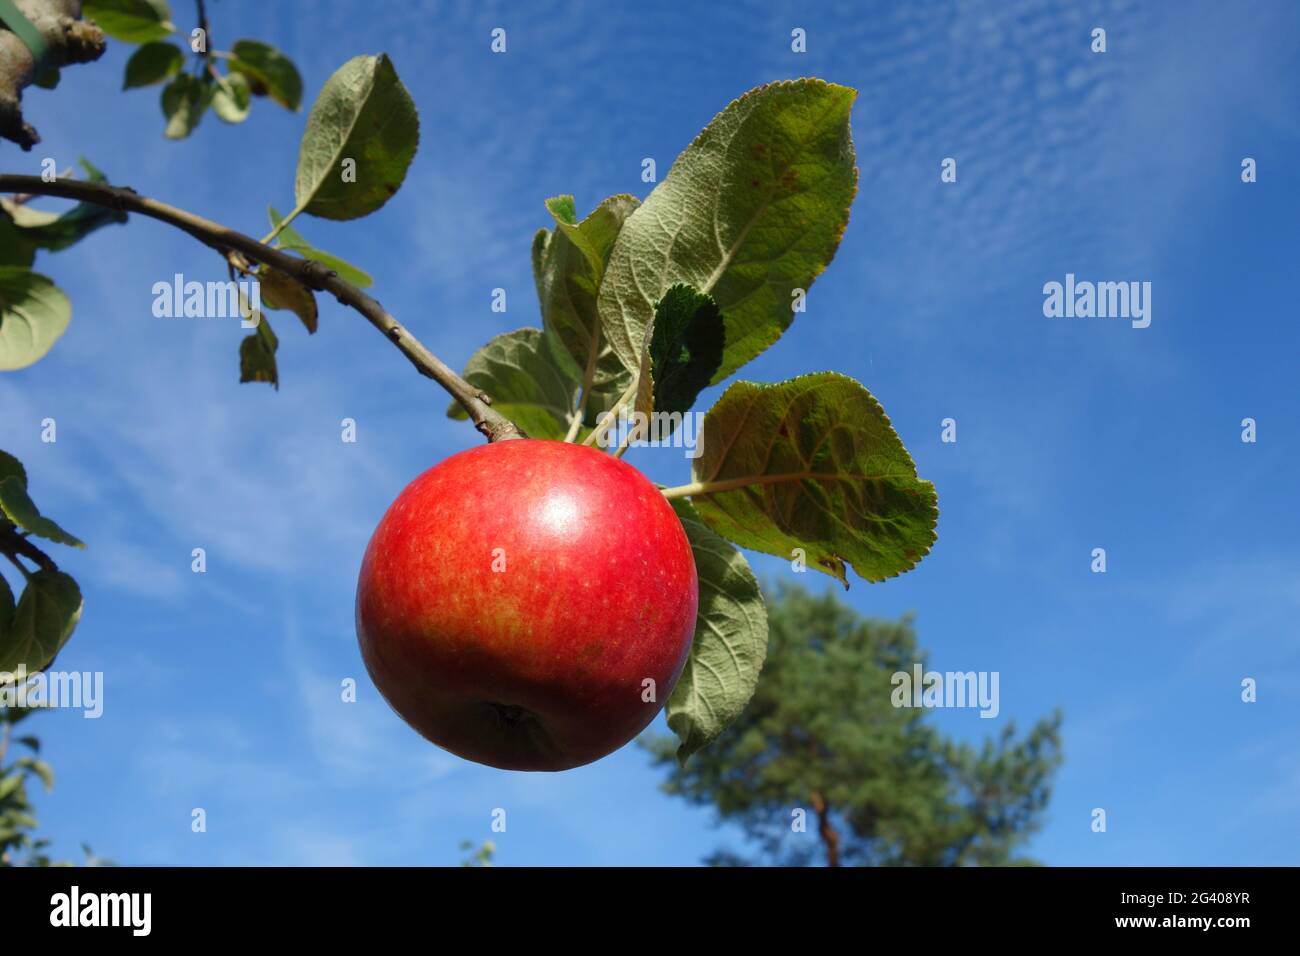 Red Elstar apple Stock Photo